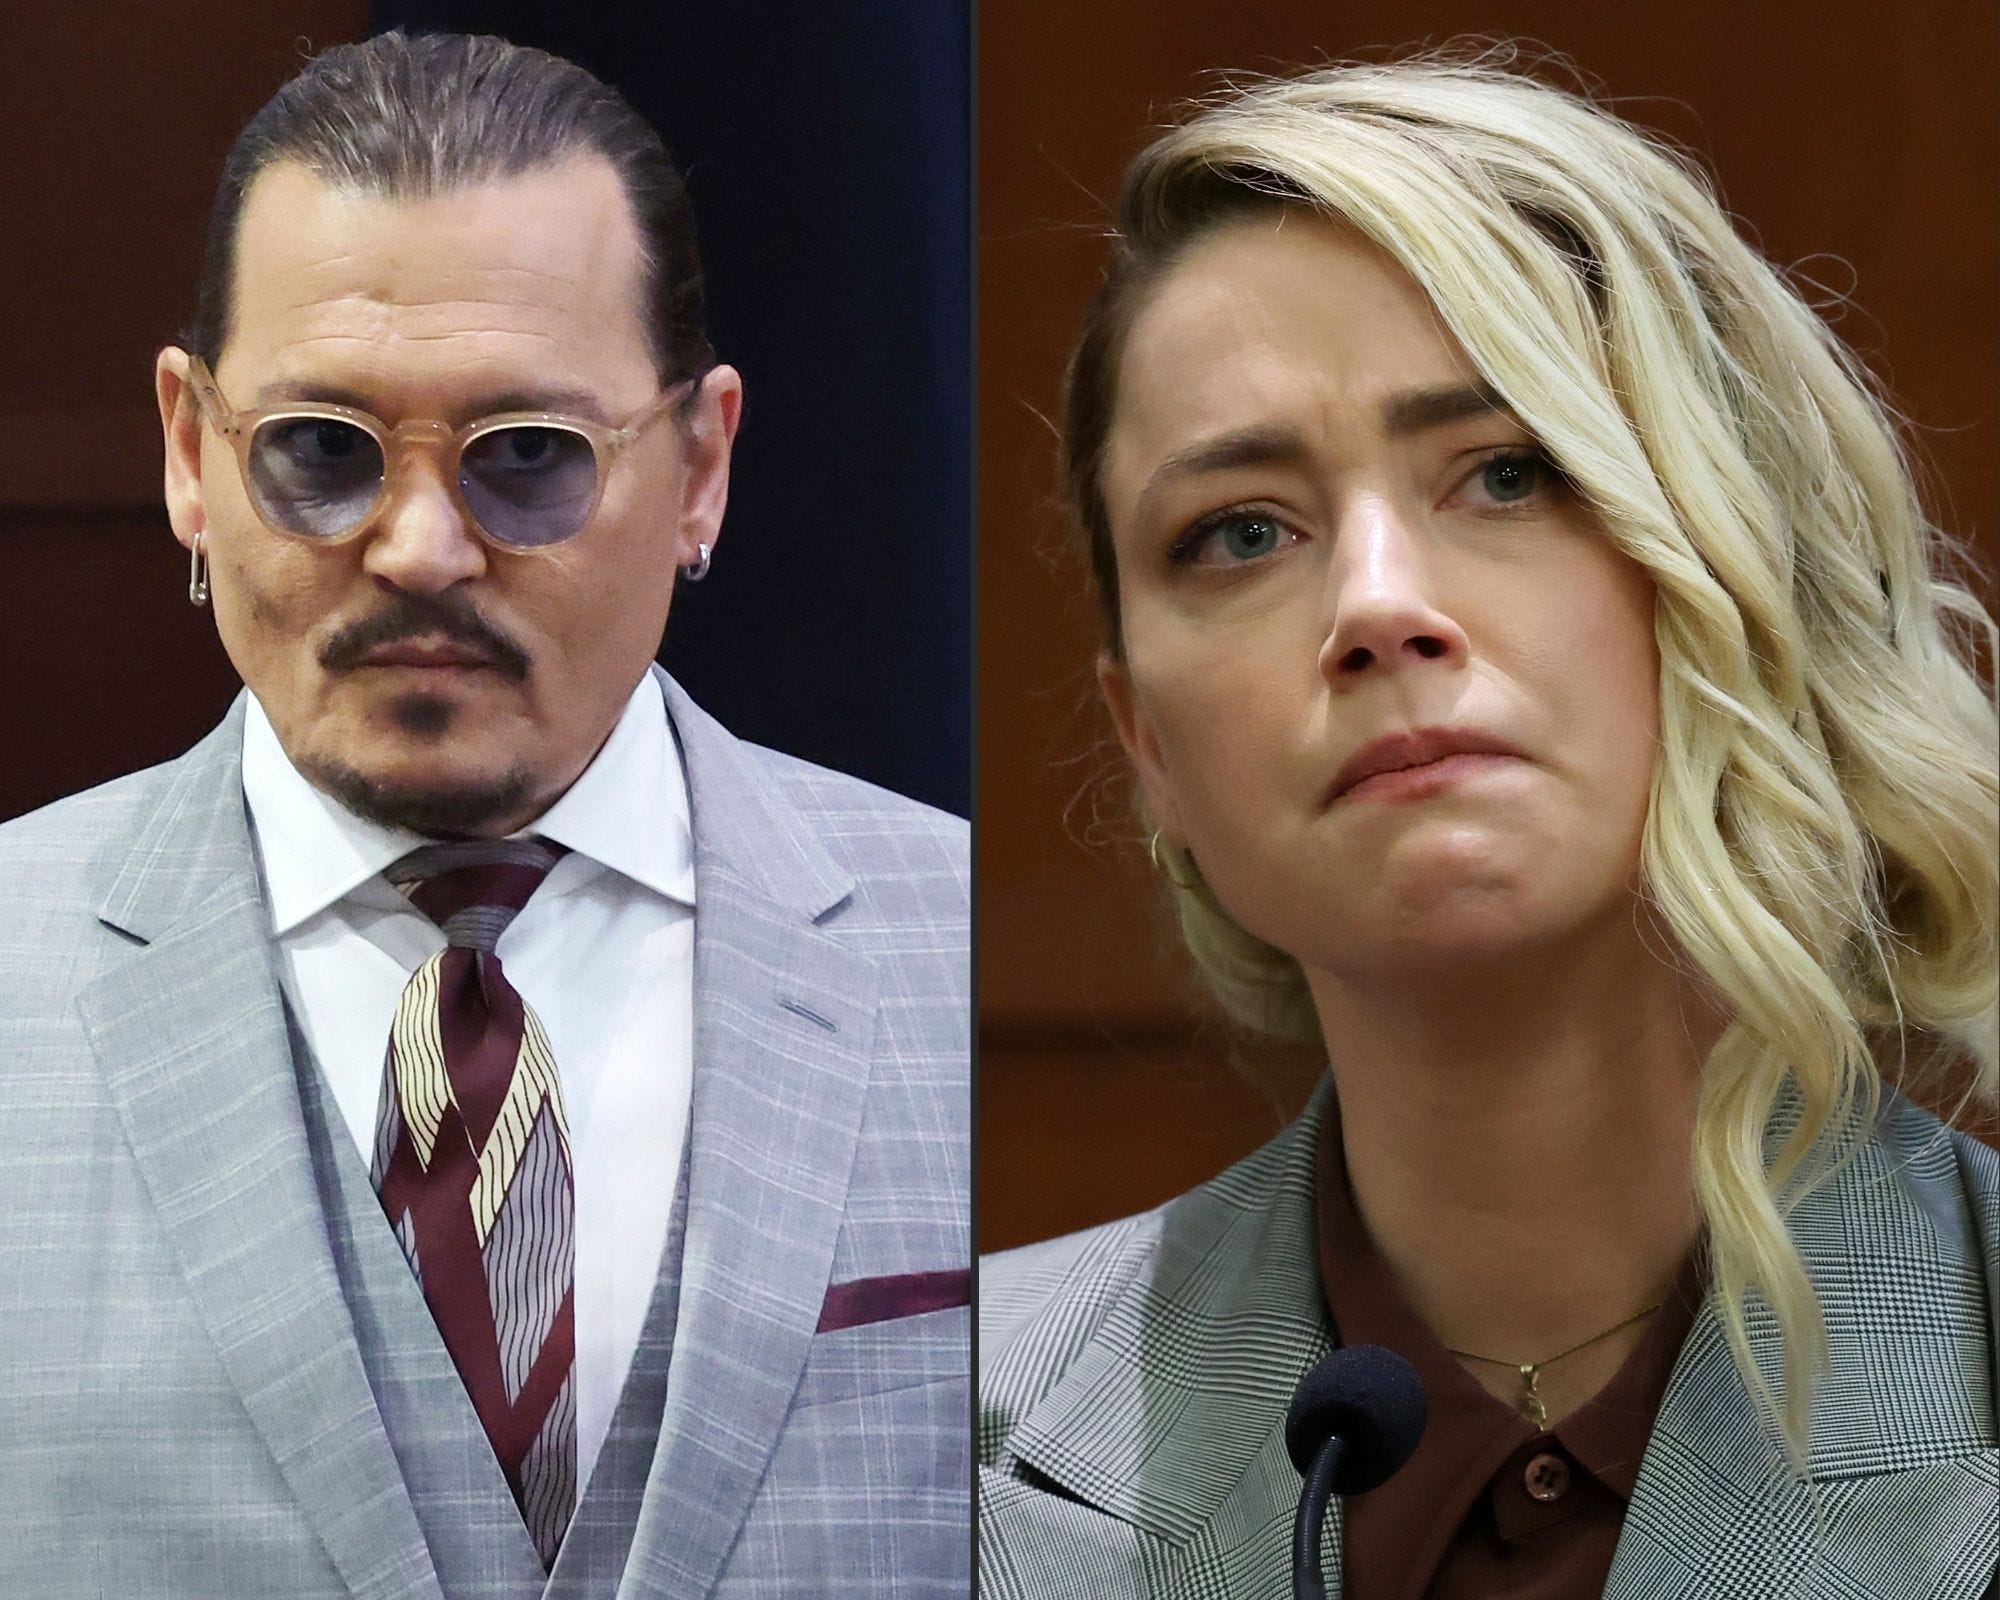 Watch live: Jury hears closing arguments in Johnny Depp Amber Heard trial